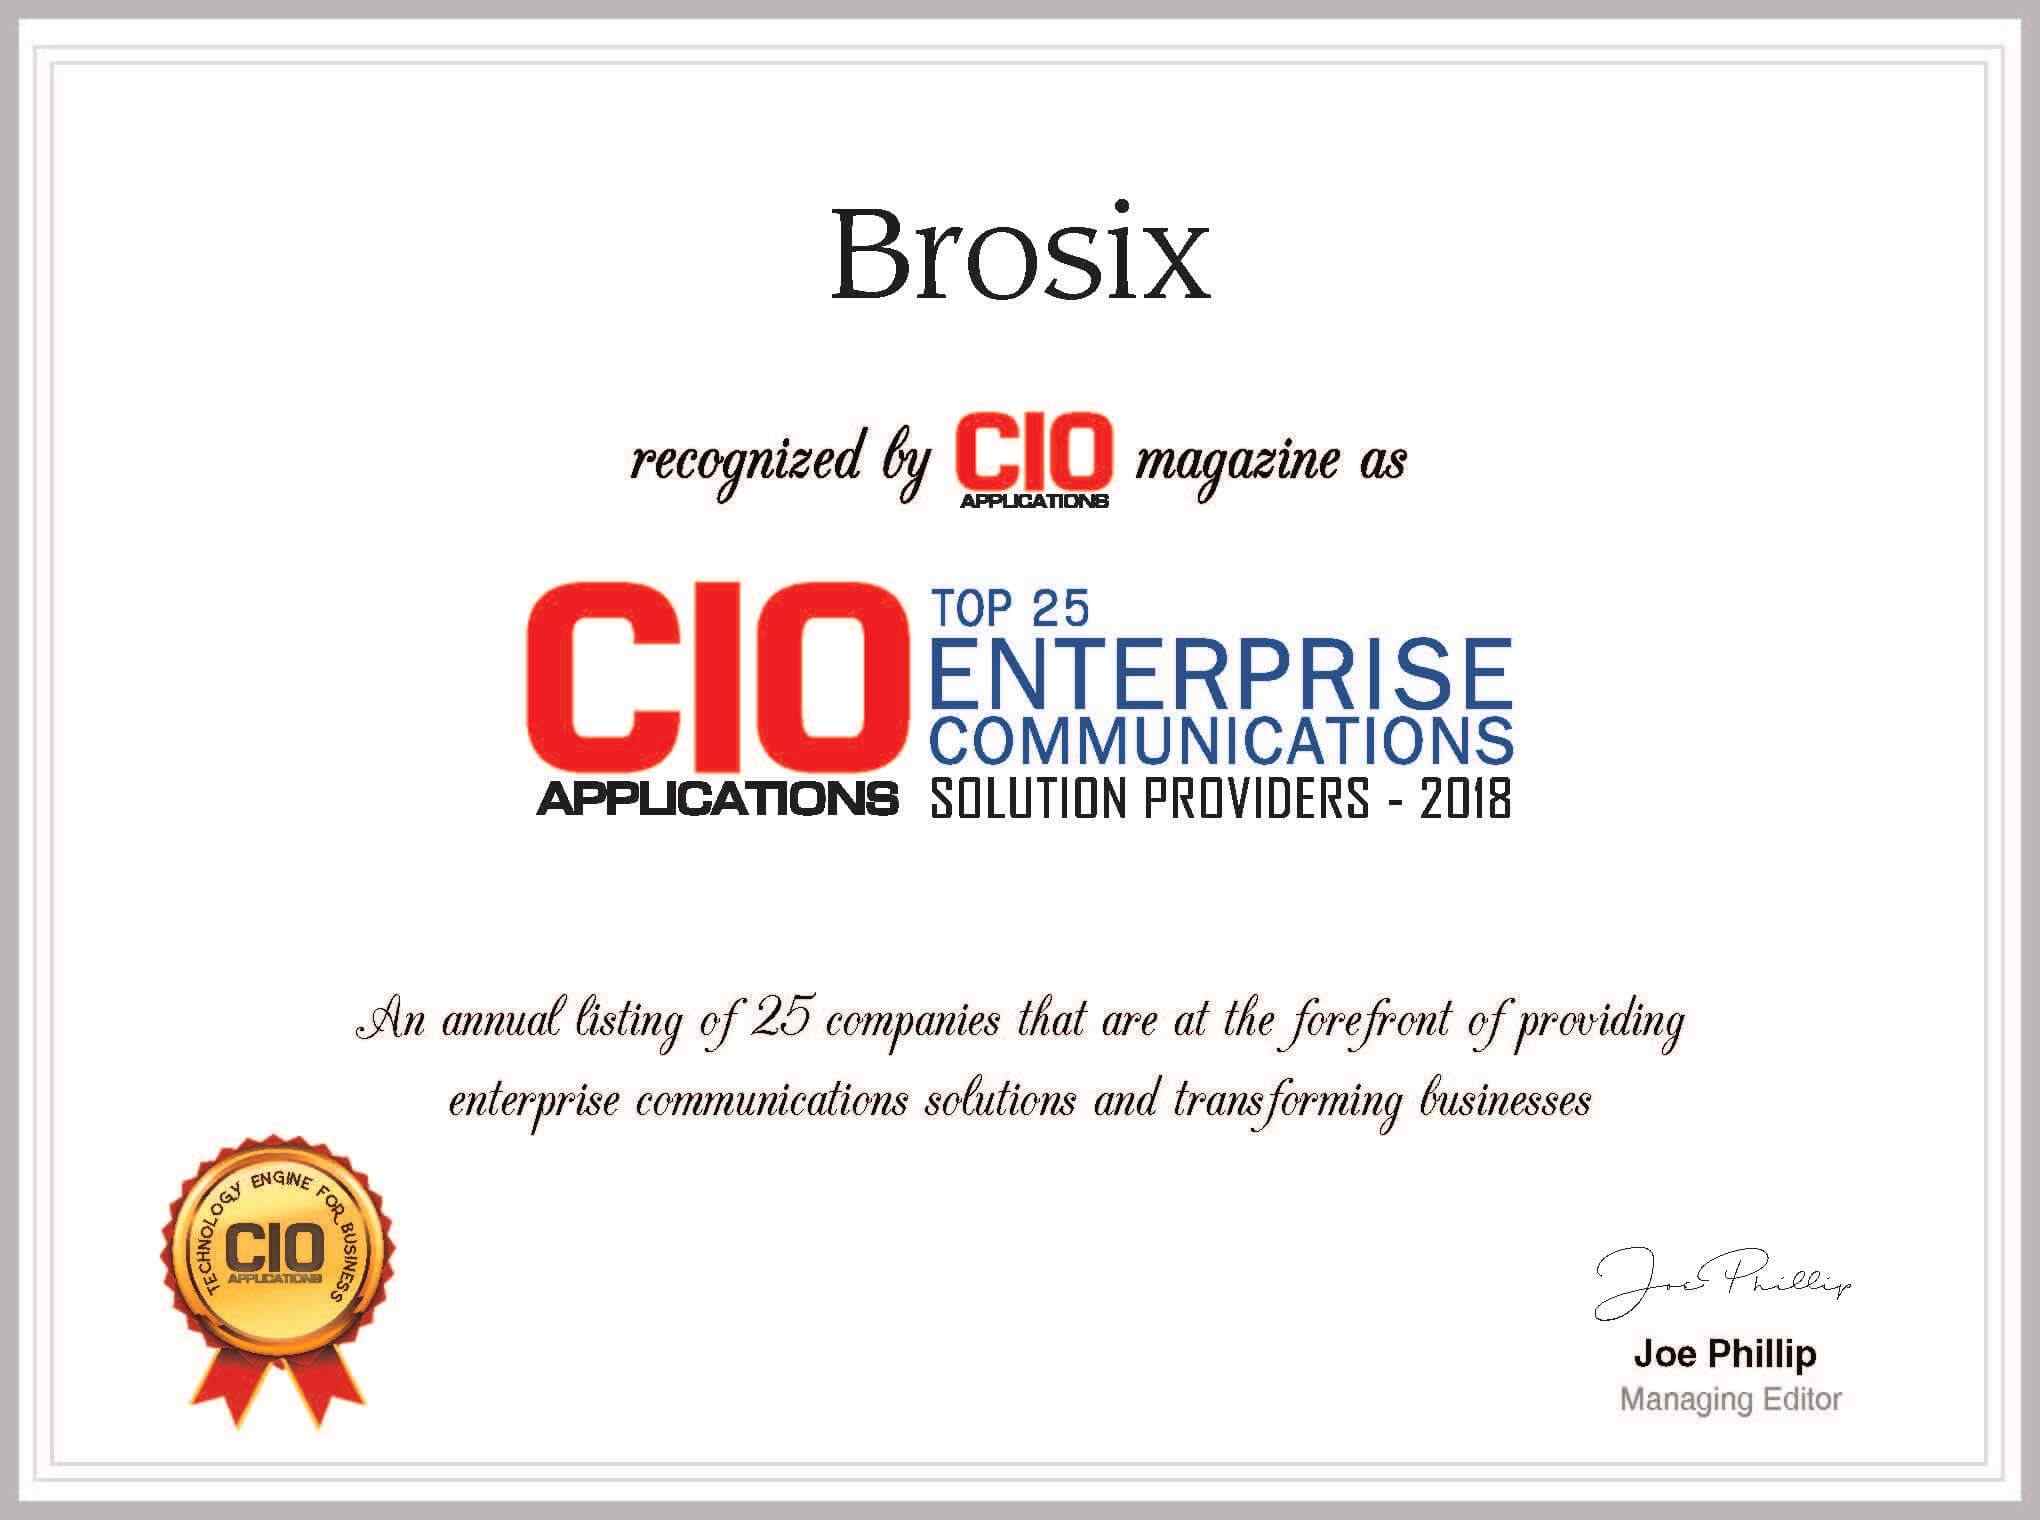 Brosix among one of 25 enterprise communication solutions